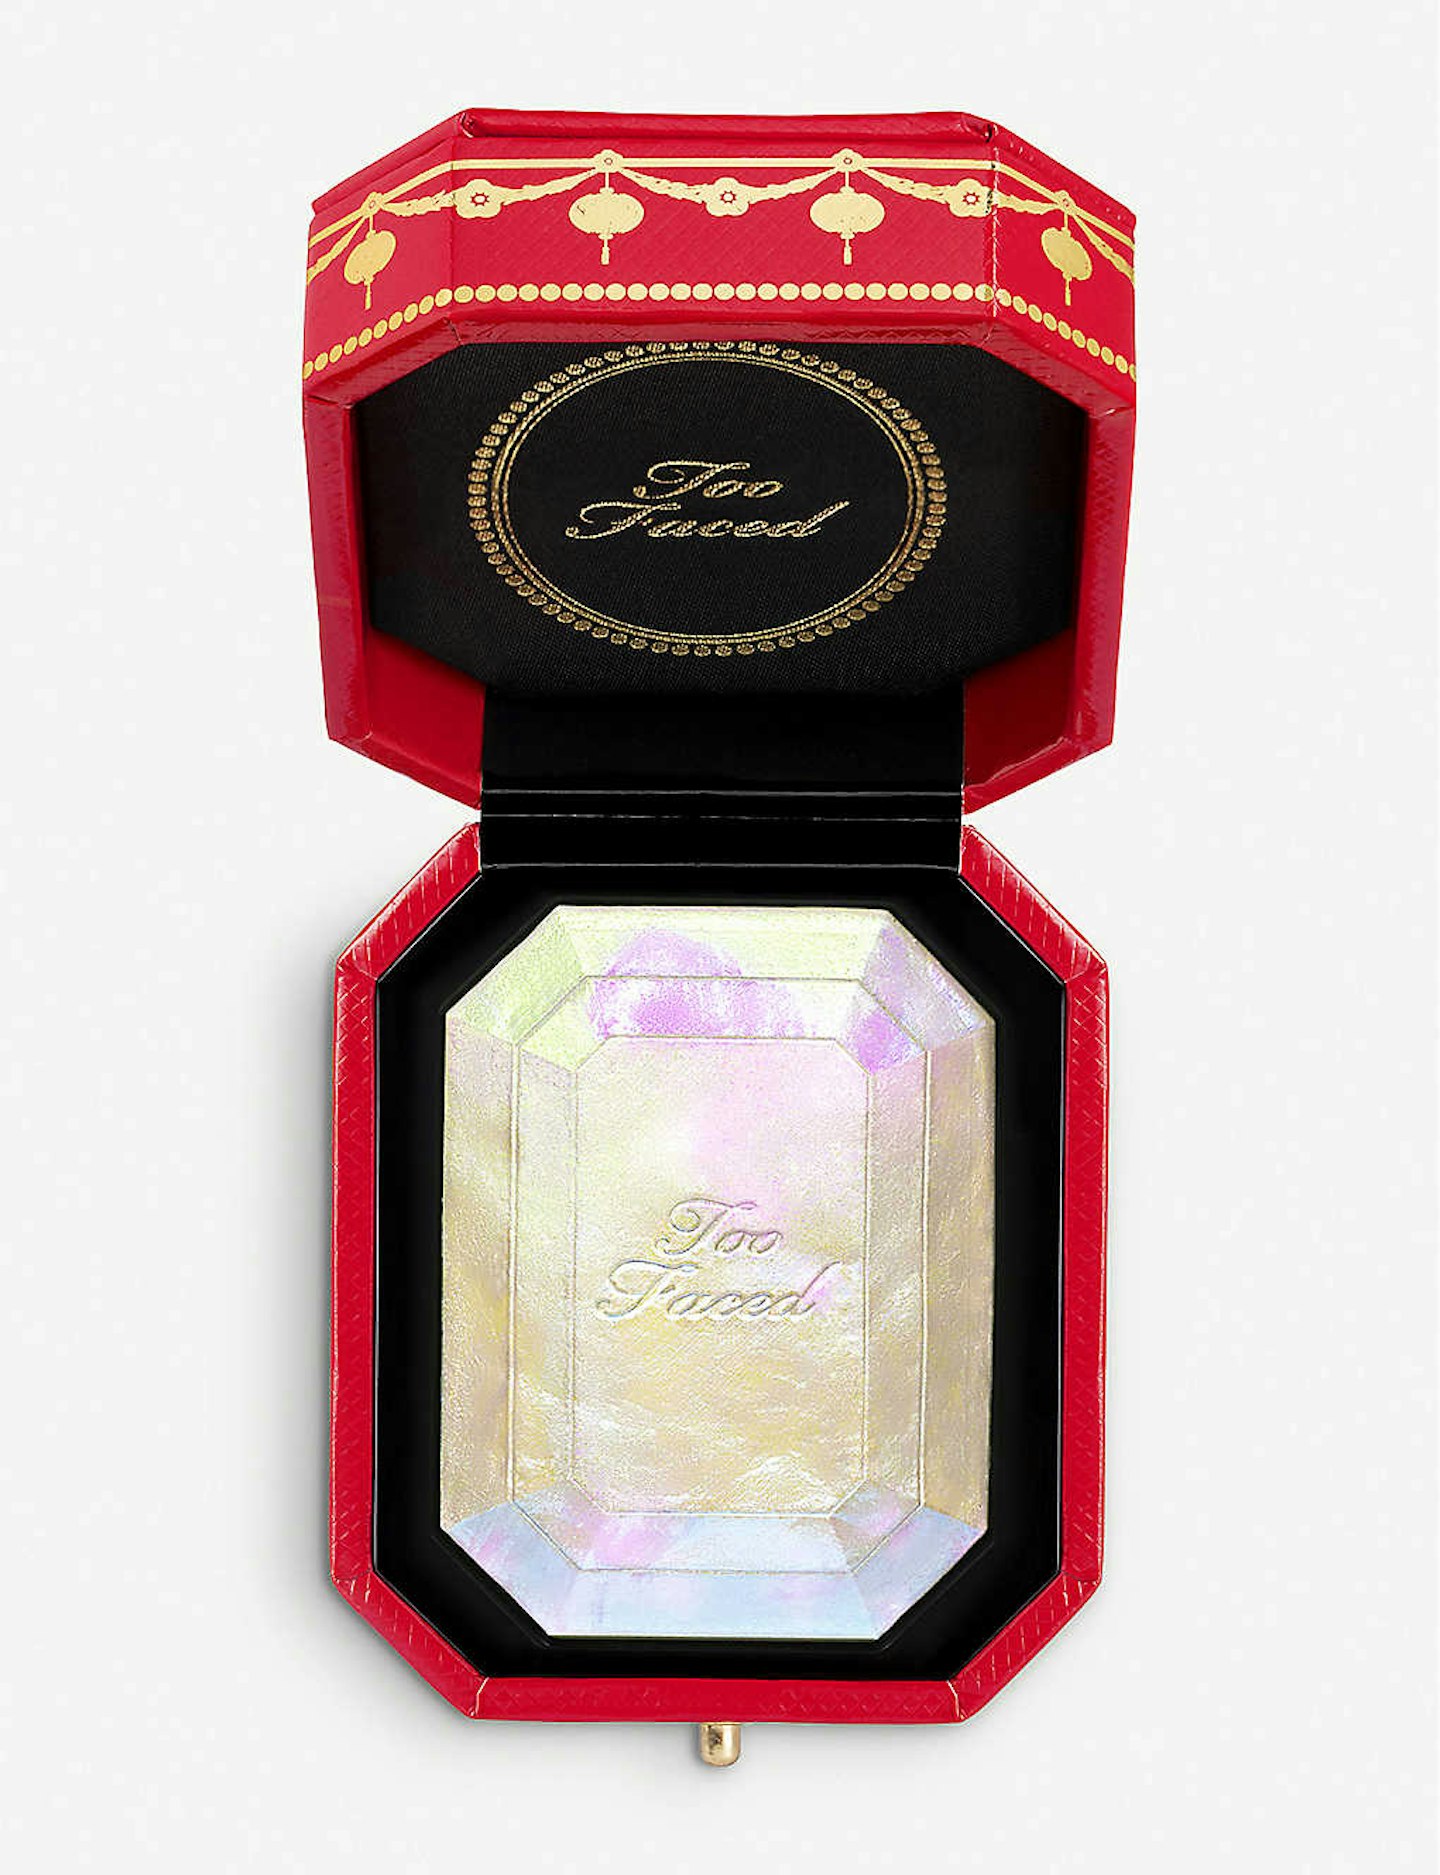 Too Faced, Lunar New Year Edition Diamond Highlighter, £28